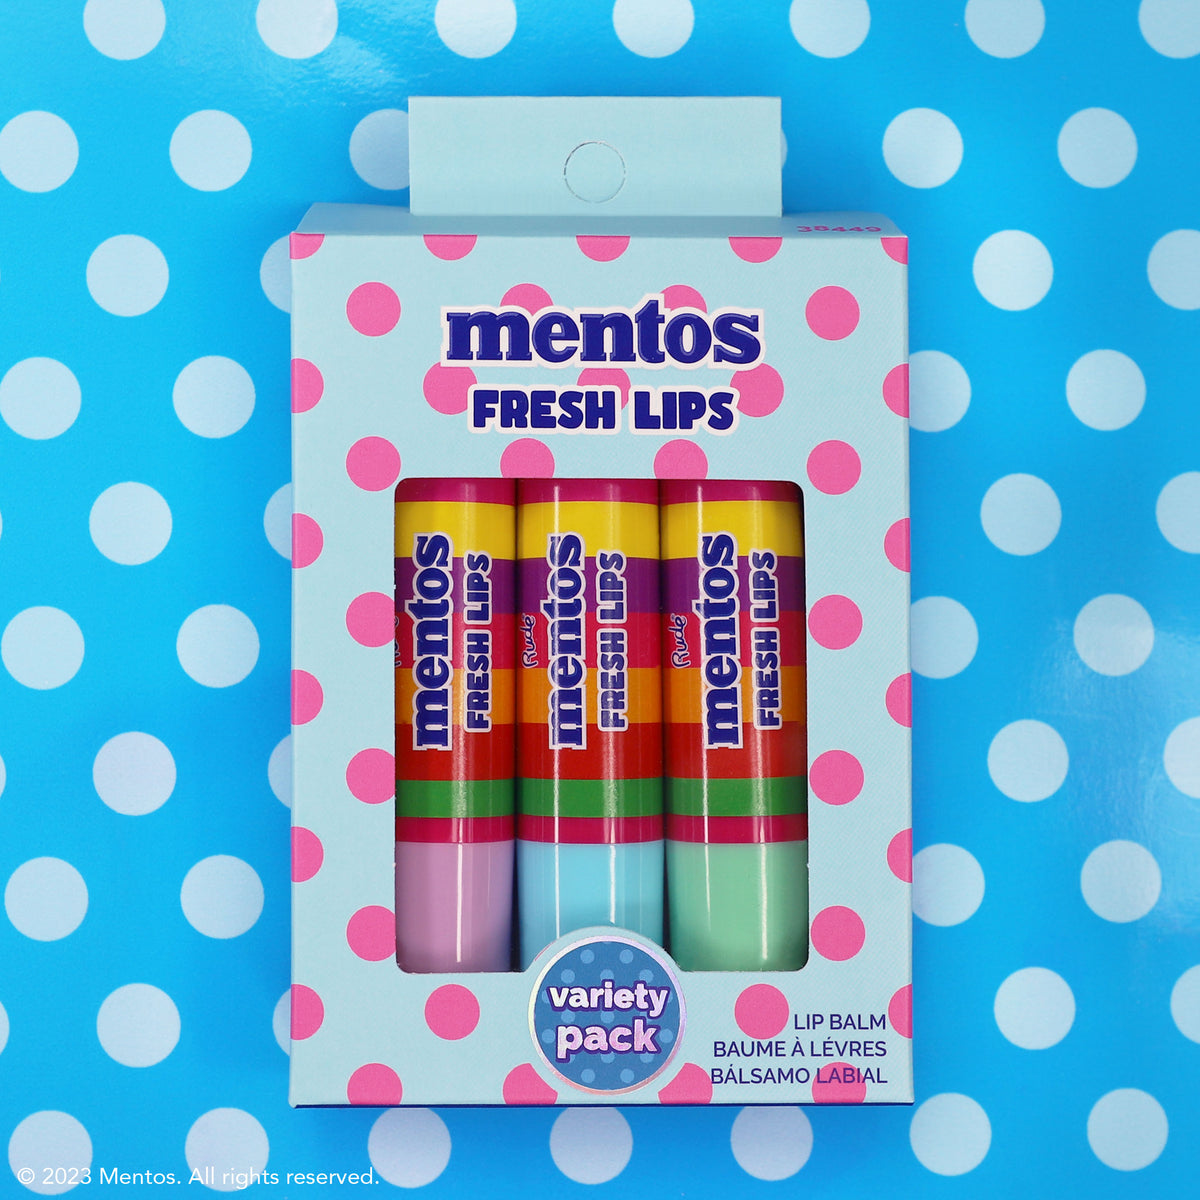 Mentos Fresh Lips Variety Pack (Lip Balm)